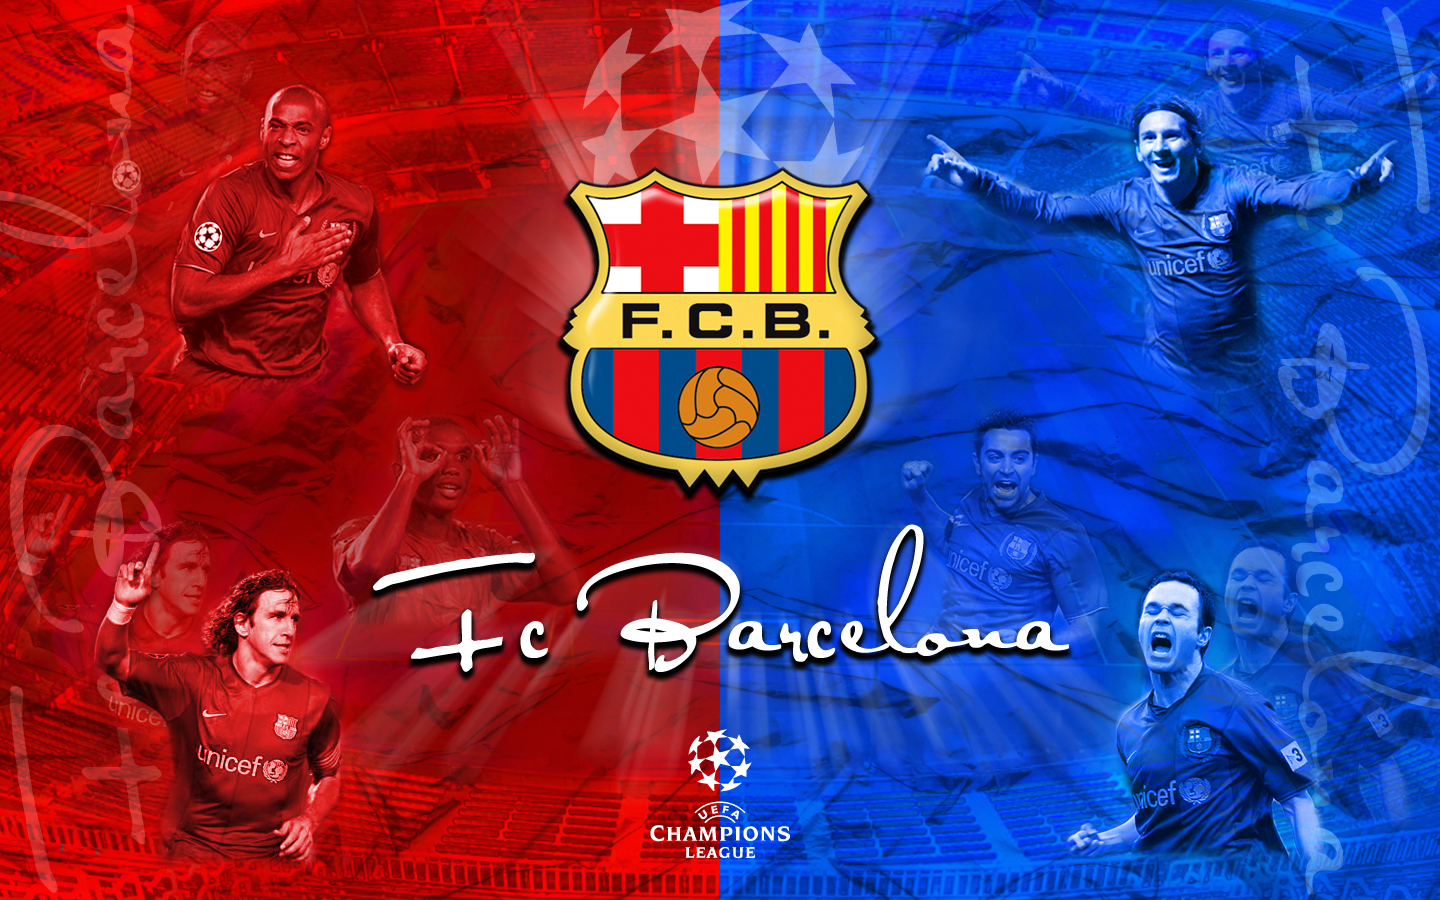 Previous, Sport - Fc Barcelona wallpaper